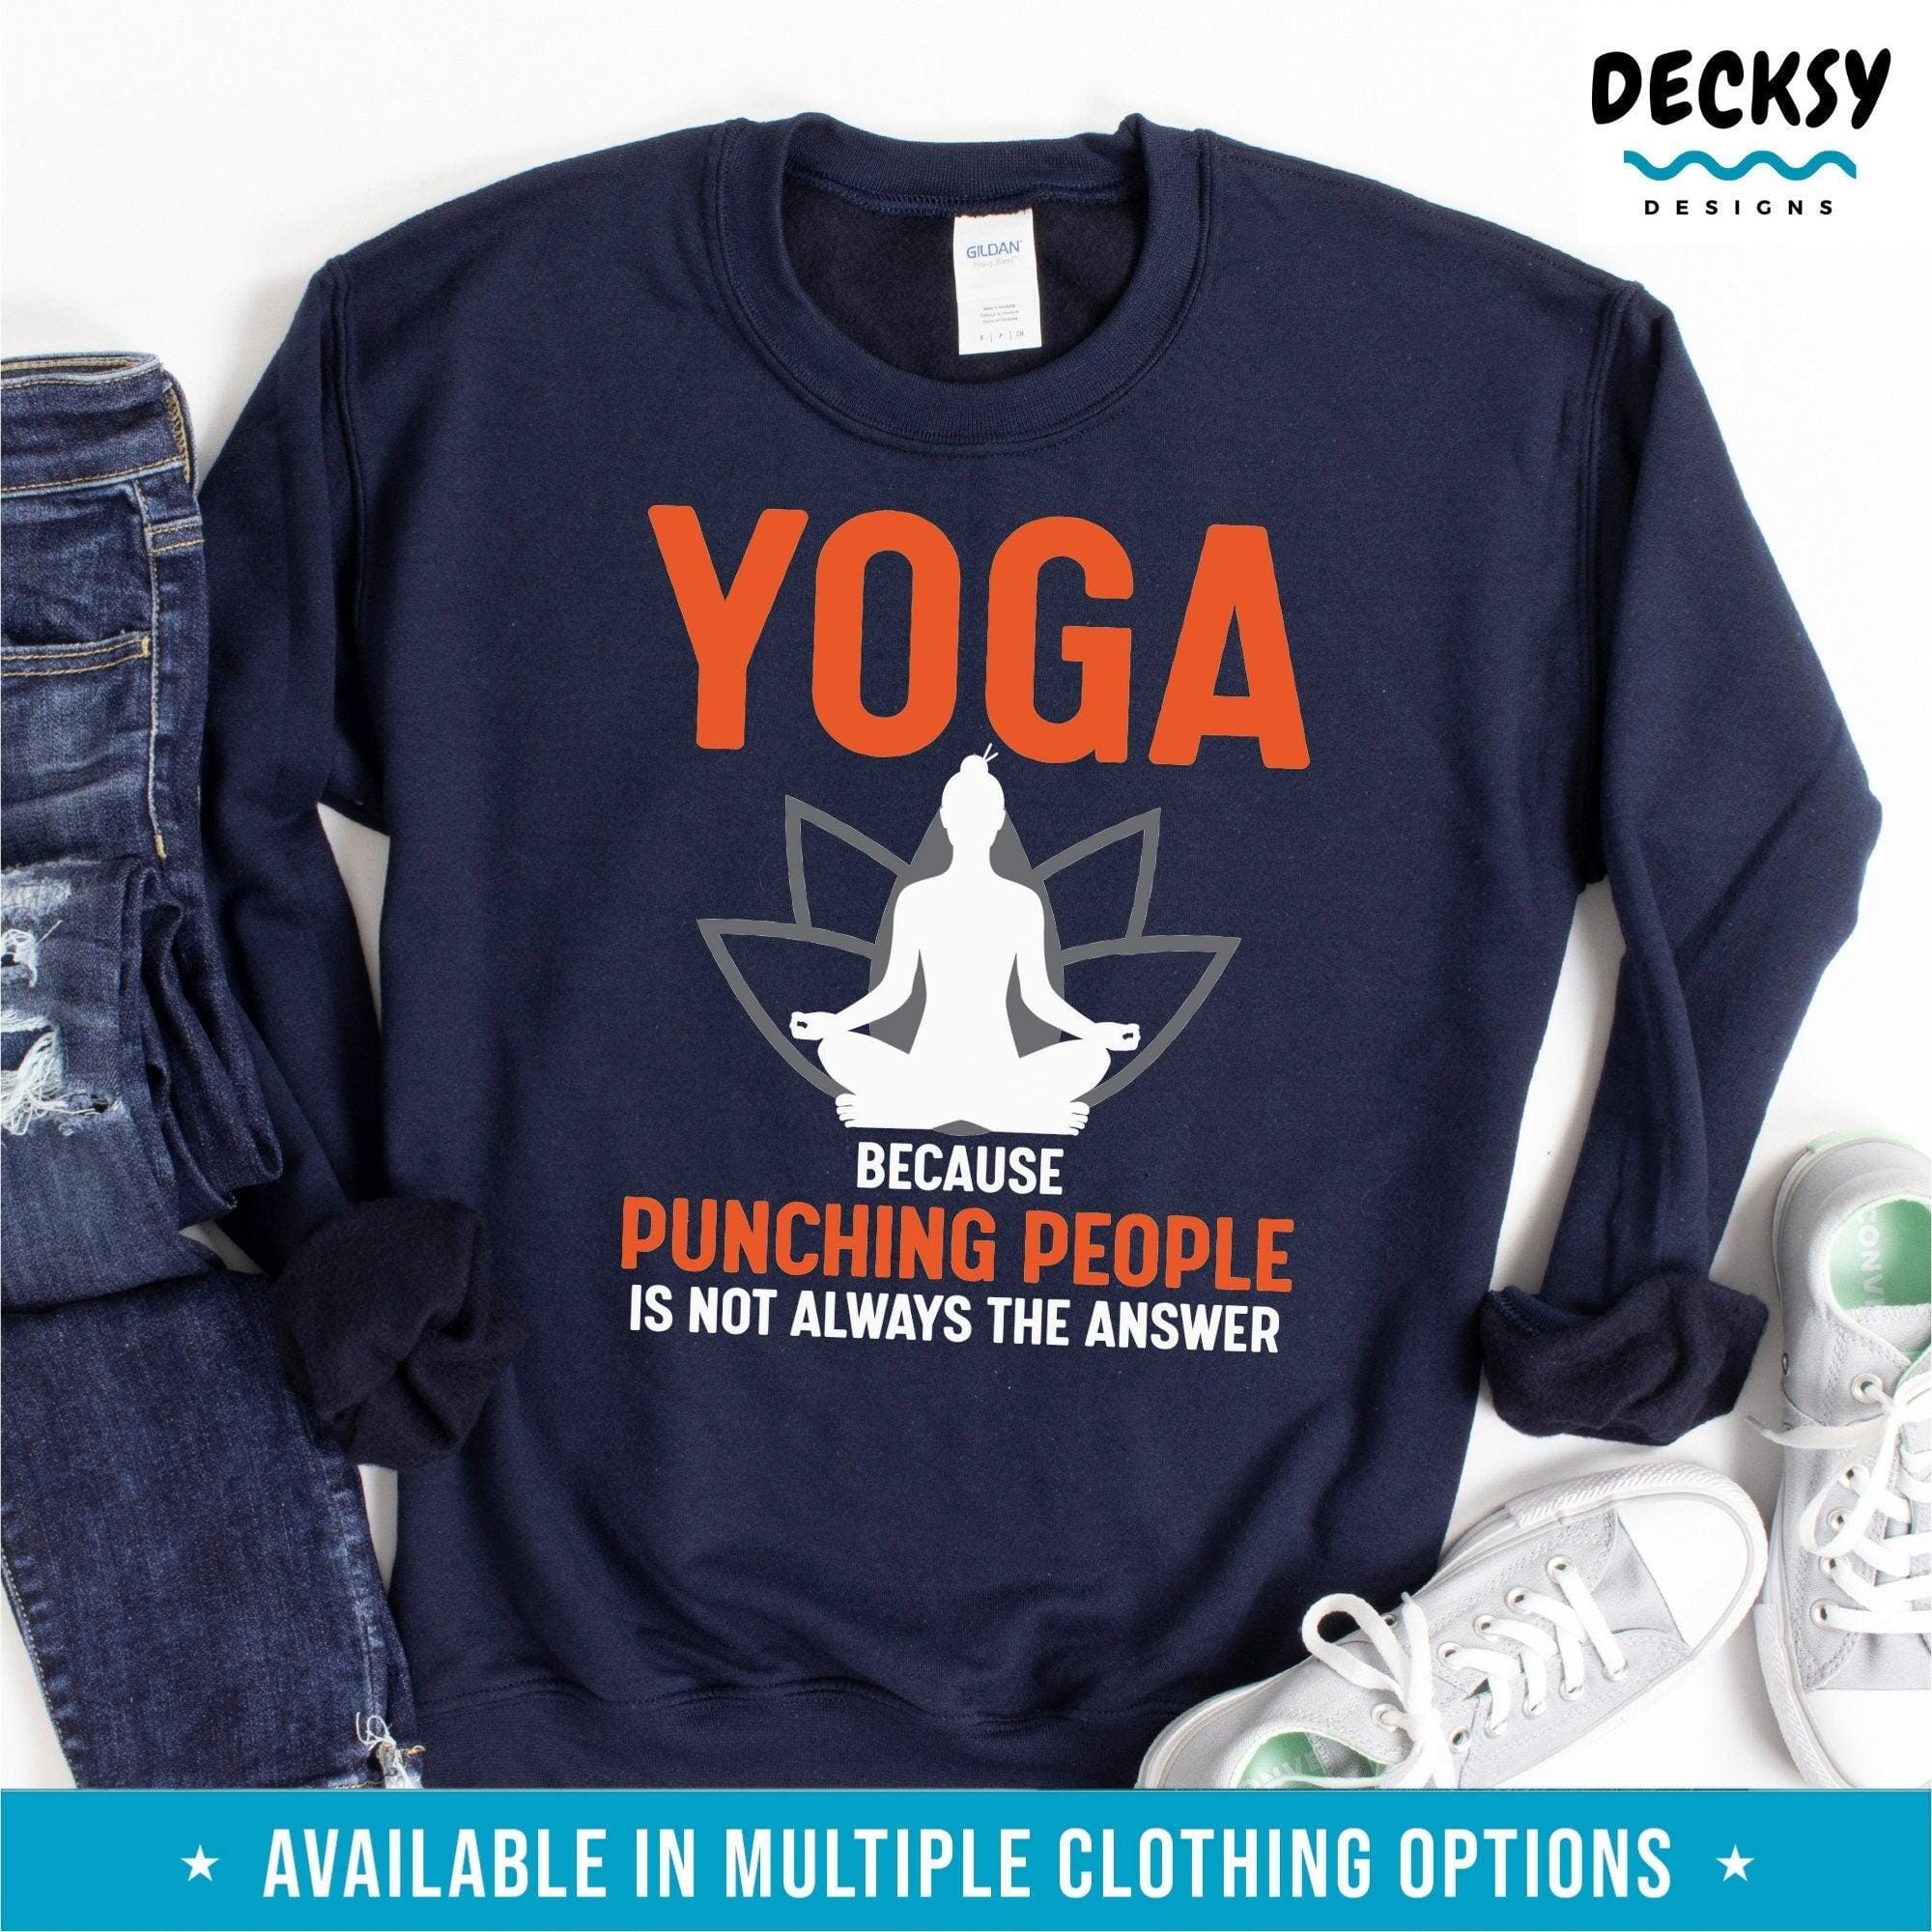 Yoga Shirt, Yogi Gifts-Clothing:Gender-Neutral Adult Clothing:Tops & Tees:T-shirts:Graphic Tees-DecksyDesigns